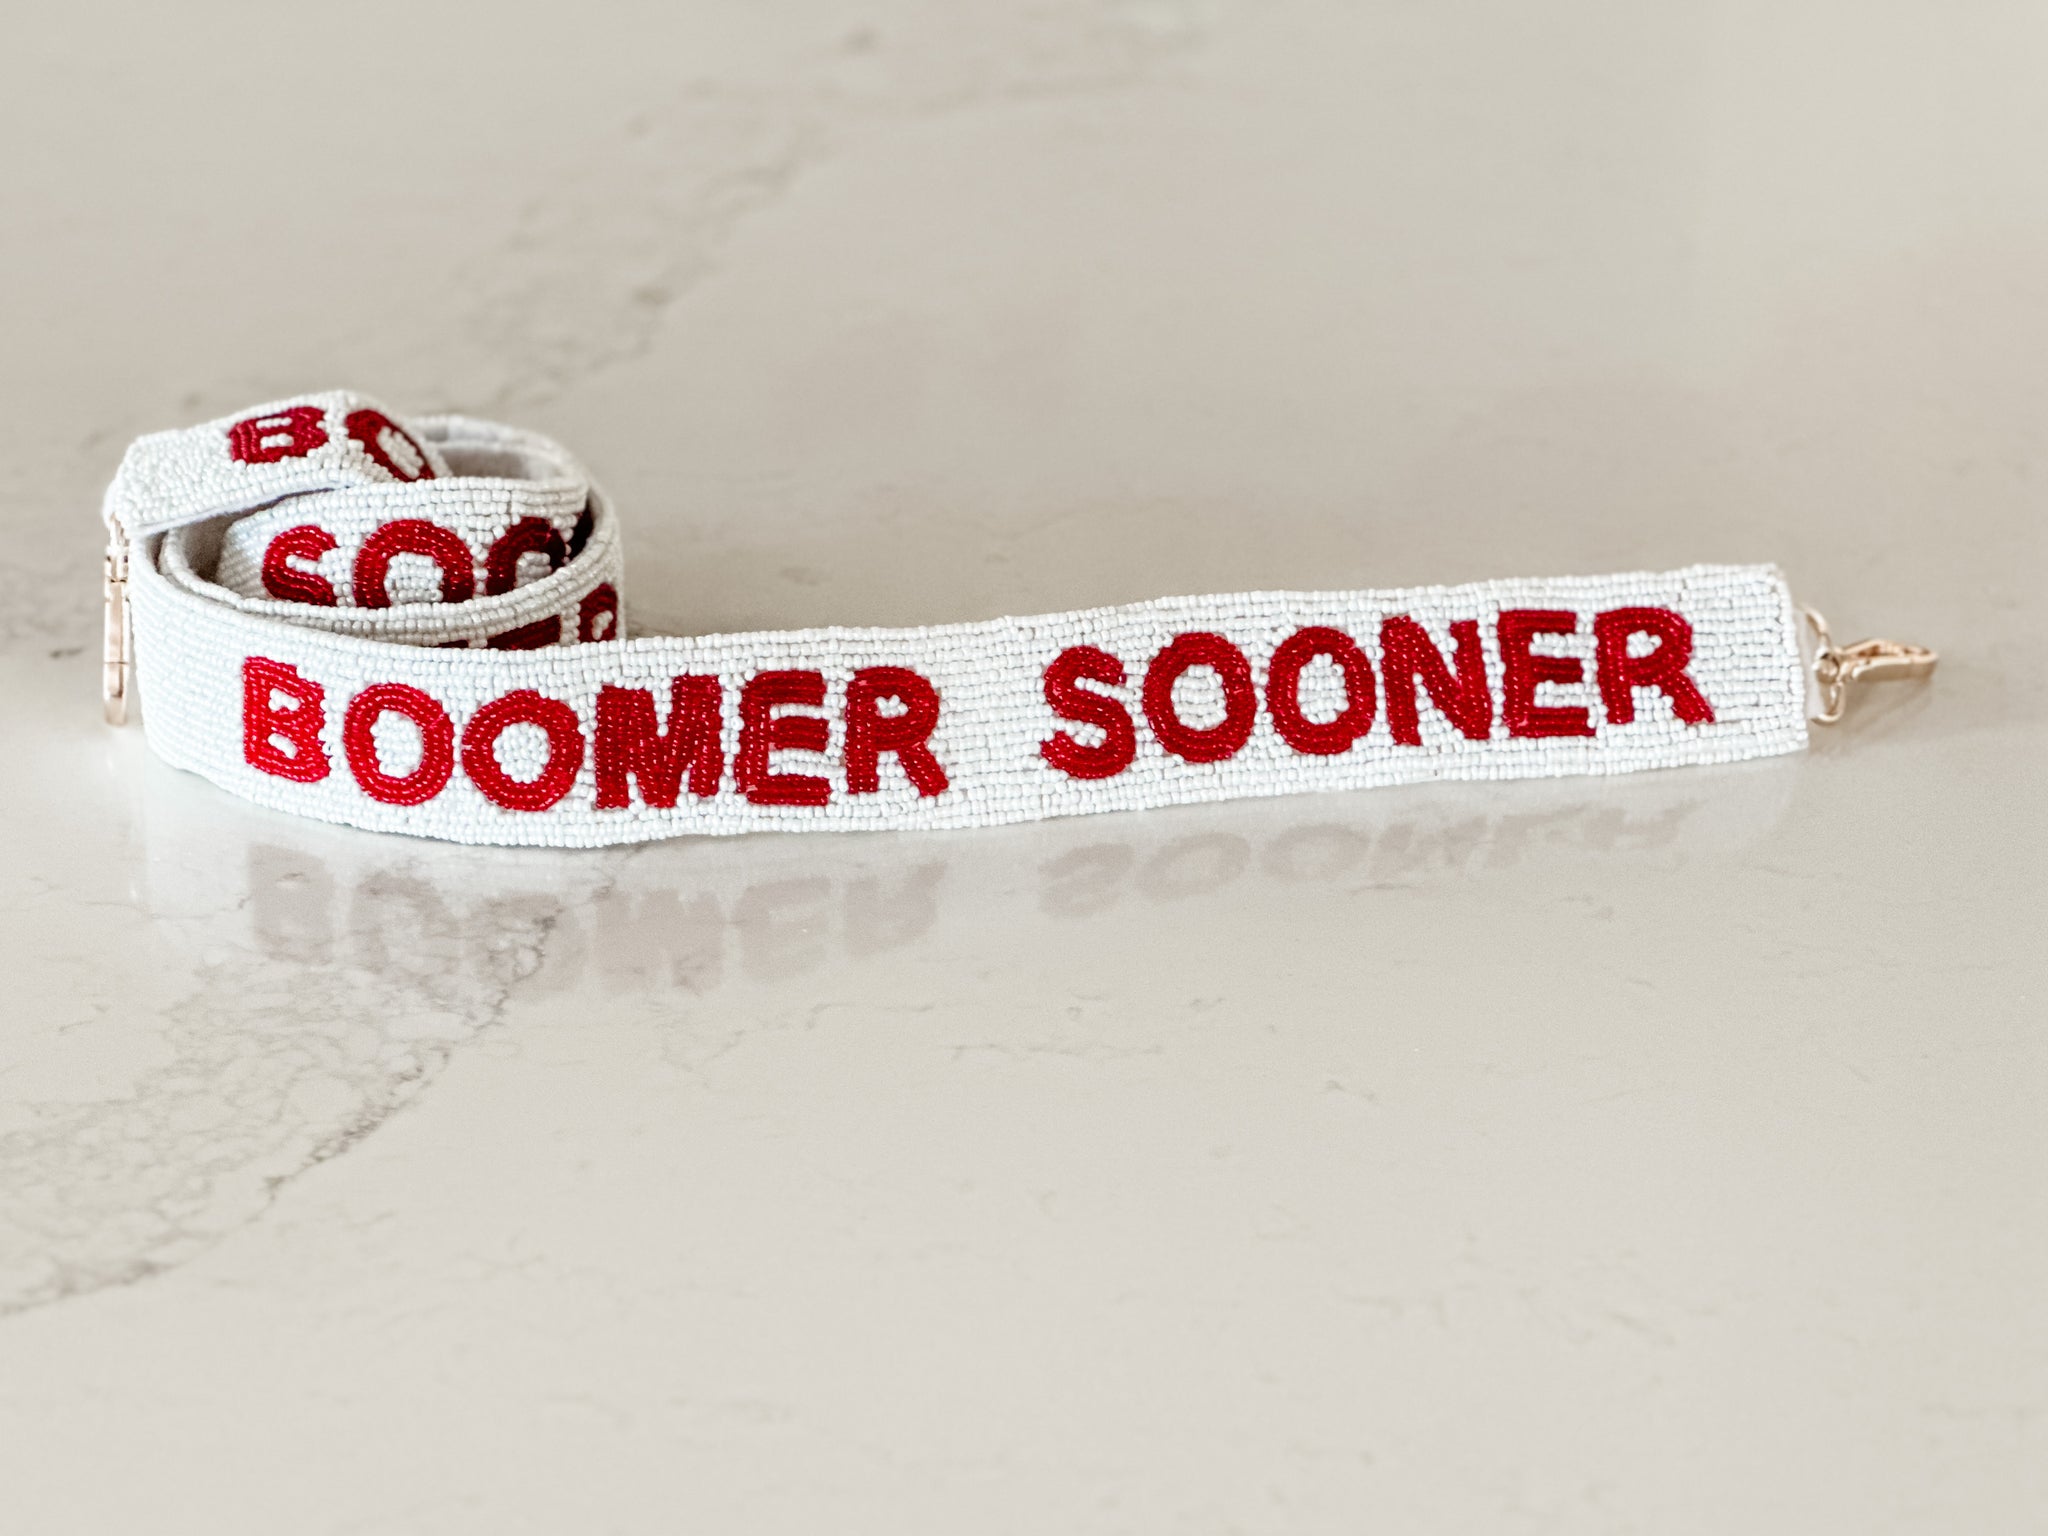 University of Oklahoma Boomer Sooner Beaded Purse Strap in Crimson and